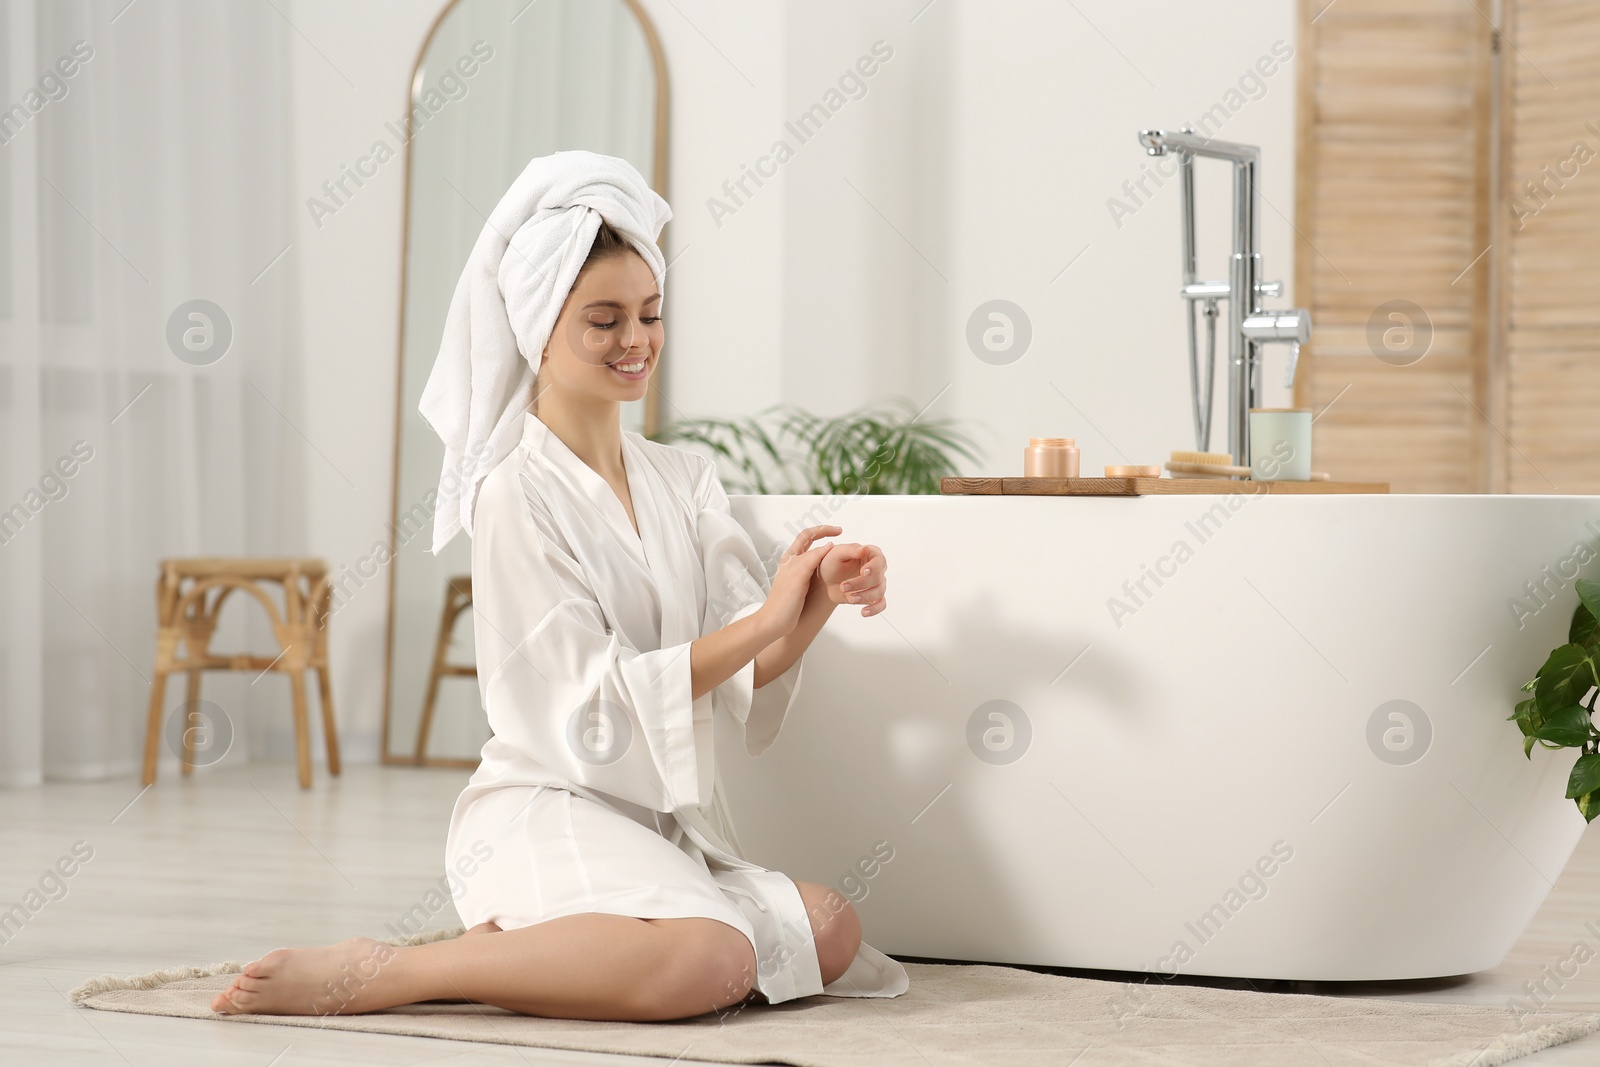 Photo of Beautiful happy woman in white robe applying cream near tub in bathroom